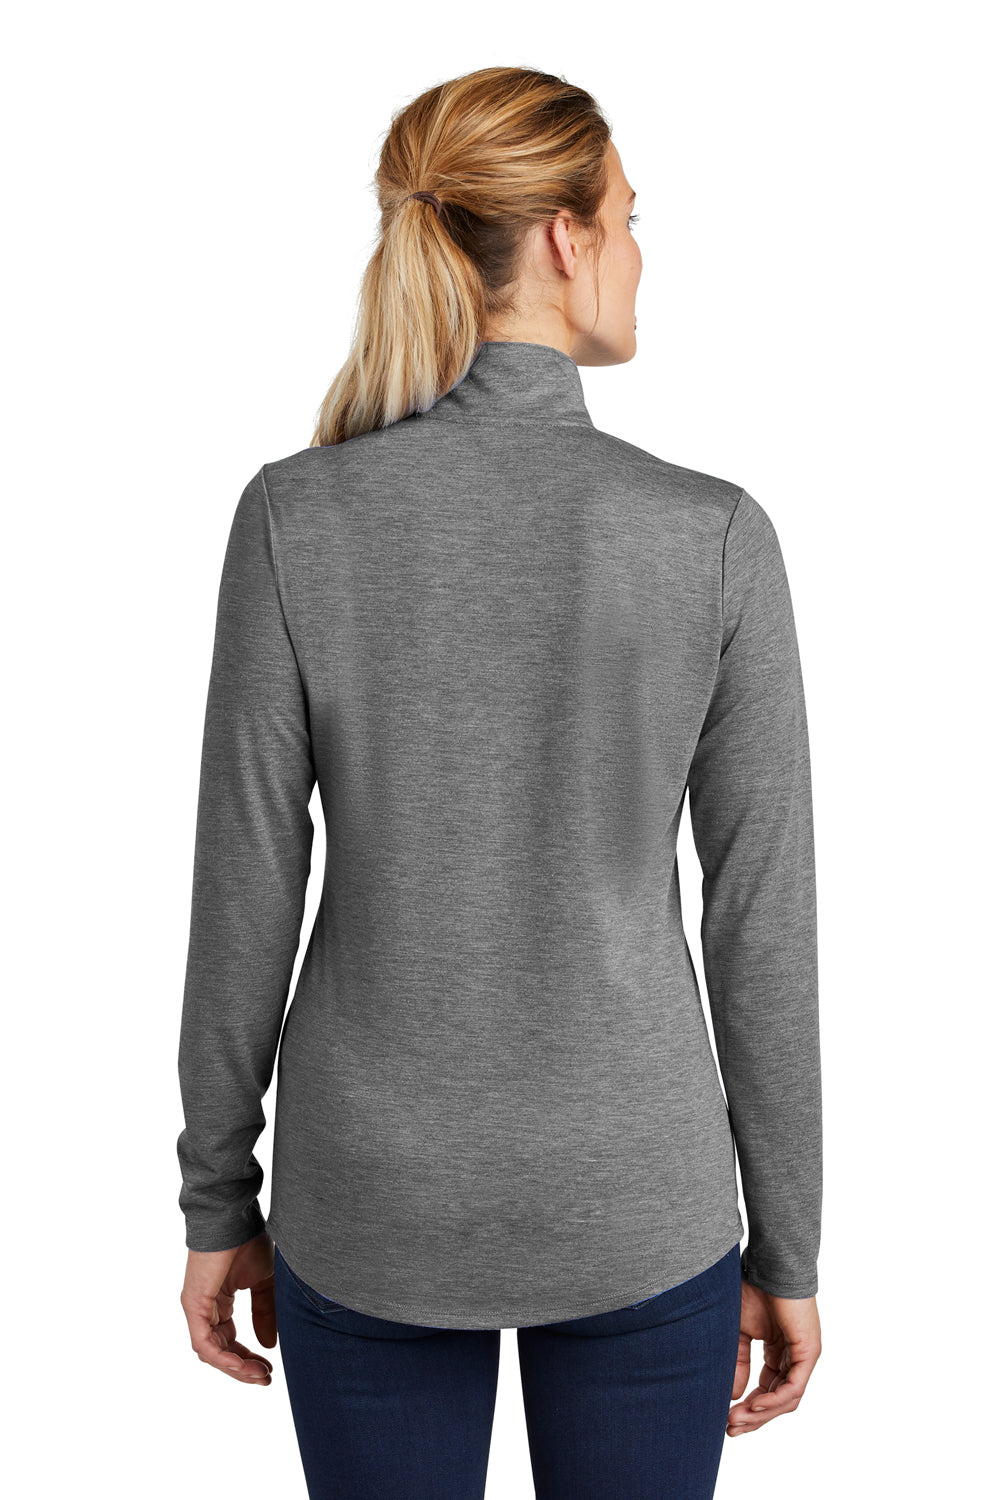 Sport-Tek LST407 Womens Moisture Wicking 1/4 Zip Sweatshirt Dark Grey Back